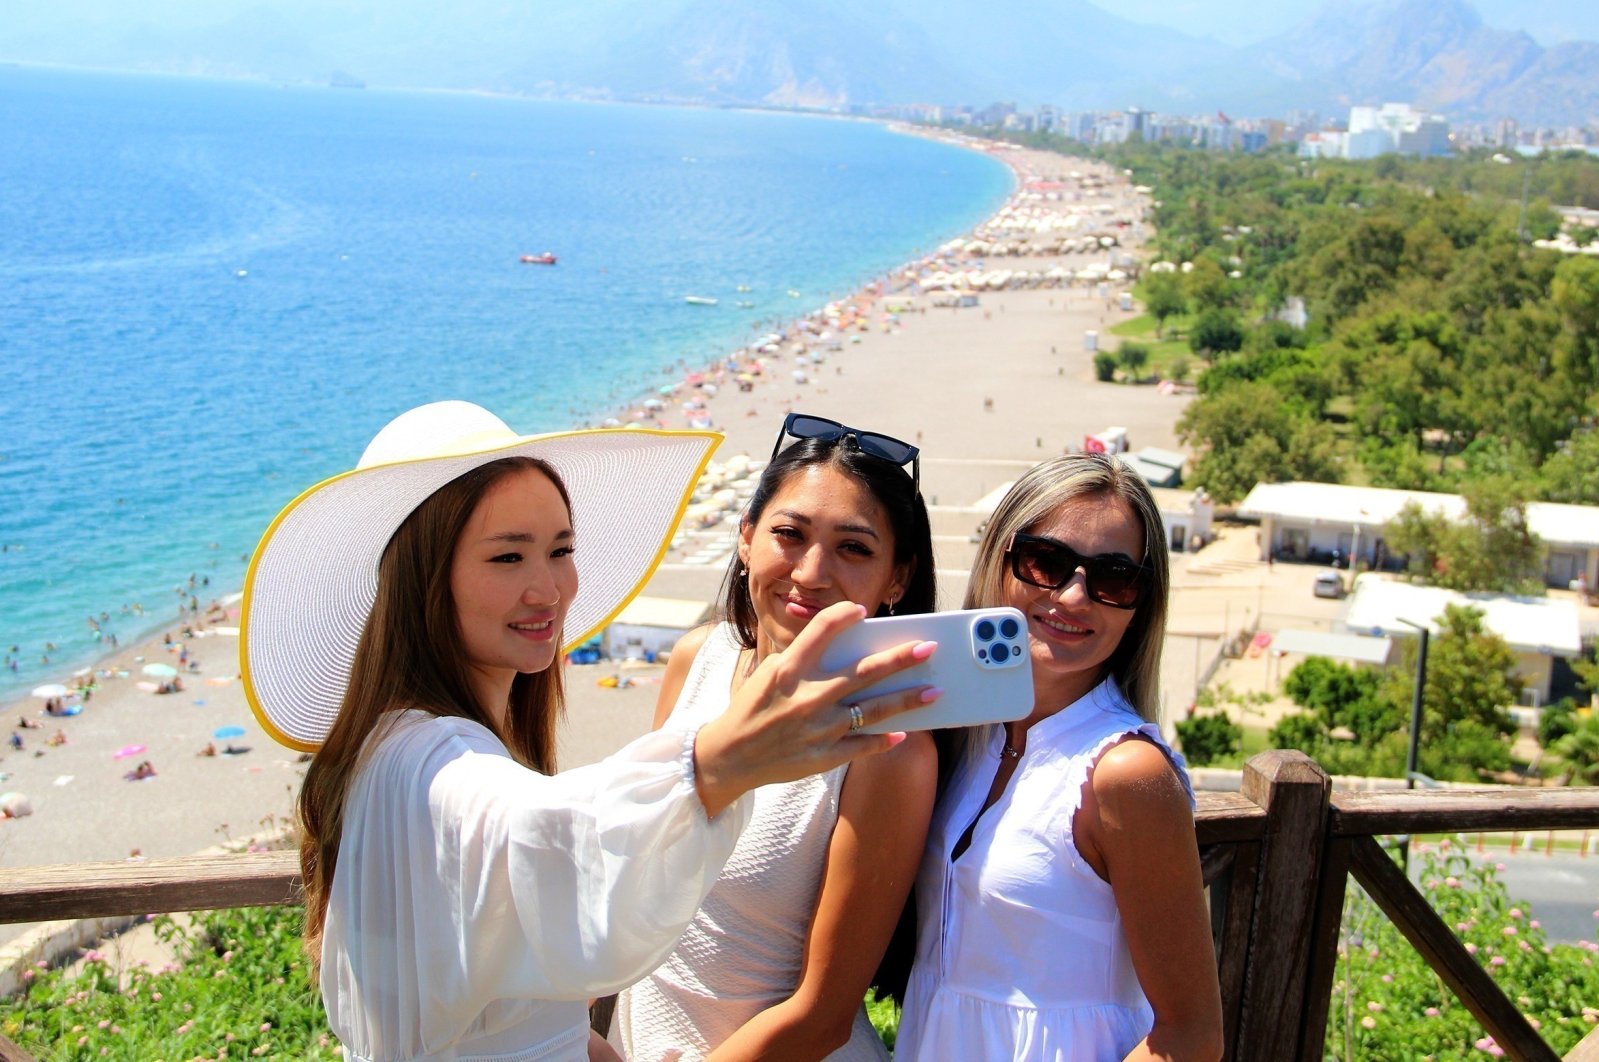 Tourists take a photo with a beach in the background in Antalya, southern Türkiye, Aug. 31, 2022. (IHA Photo)